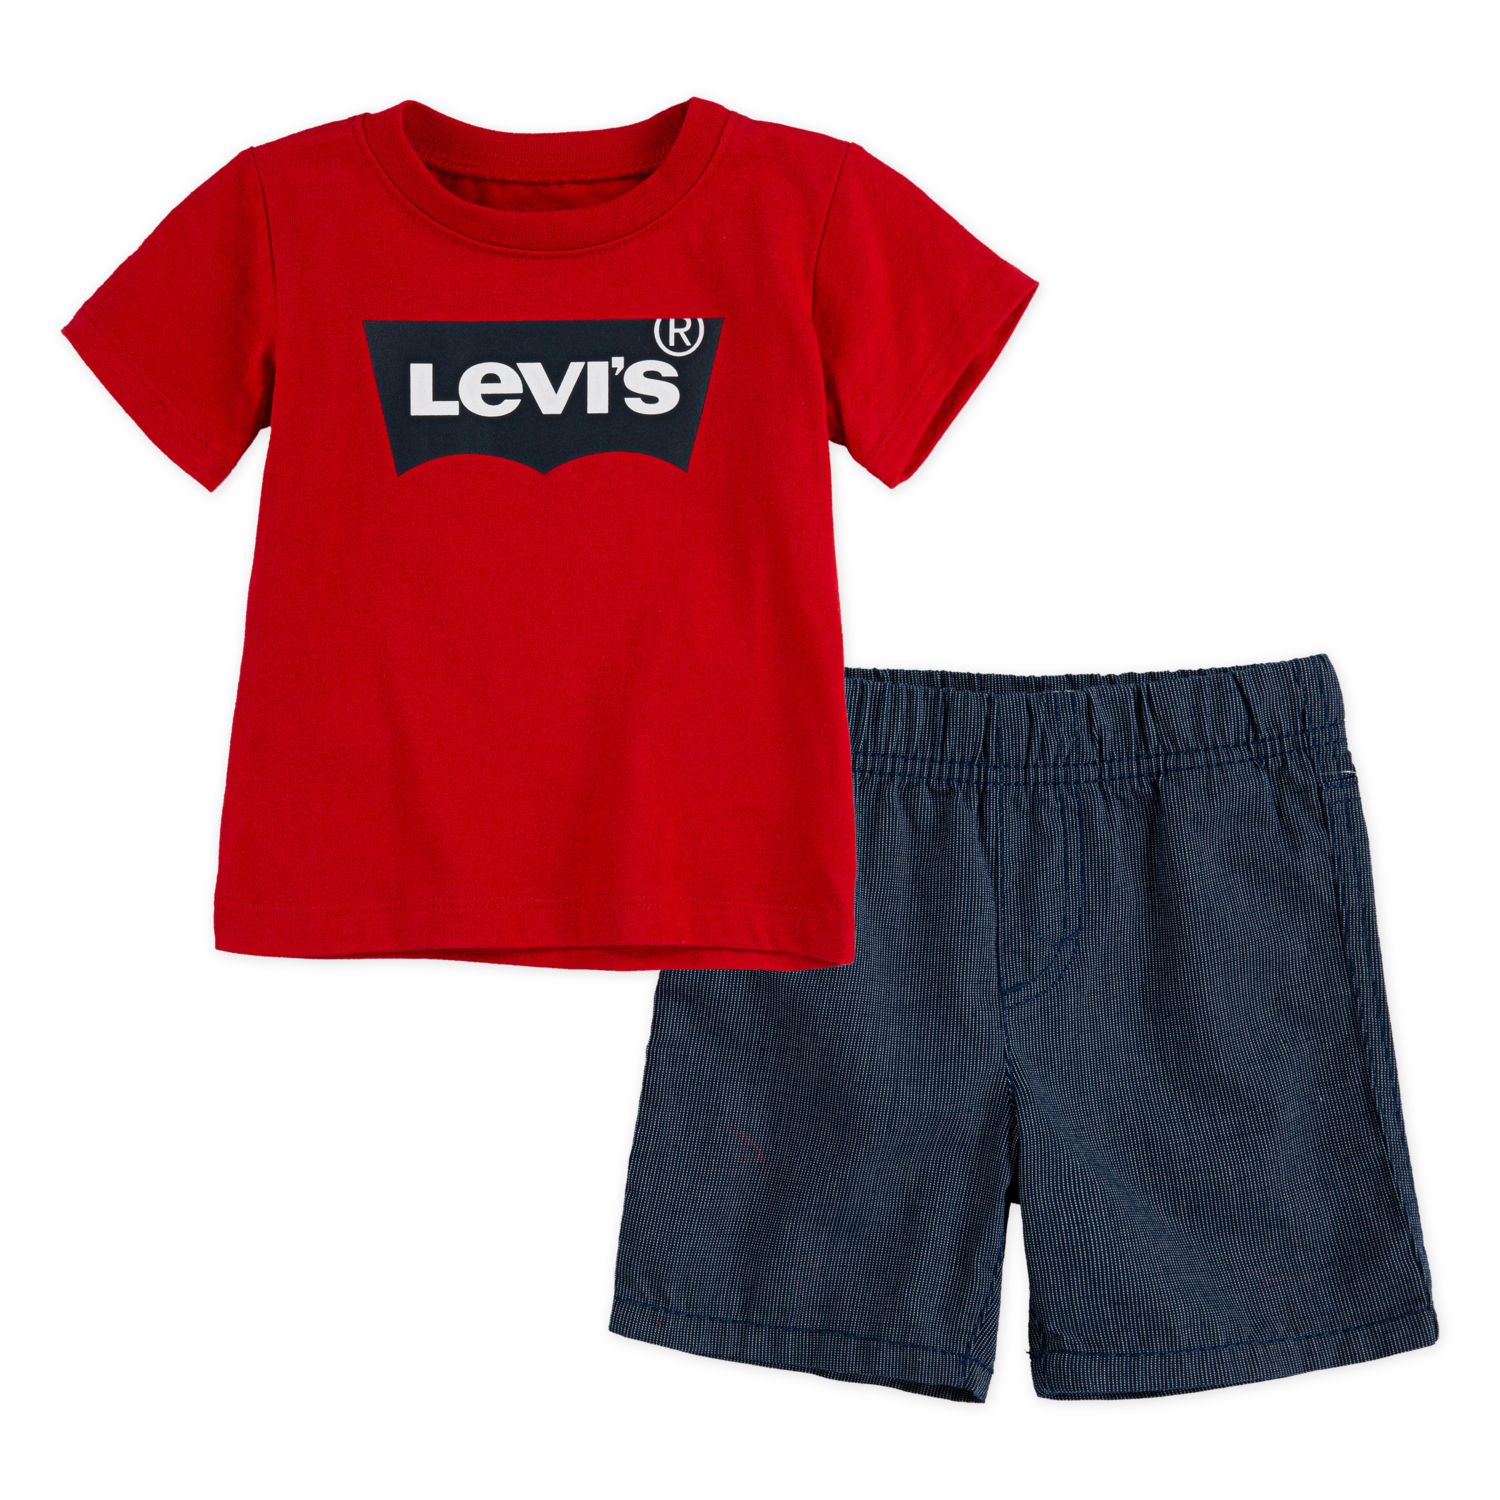 levi's baby boy clothes